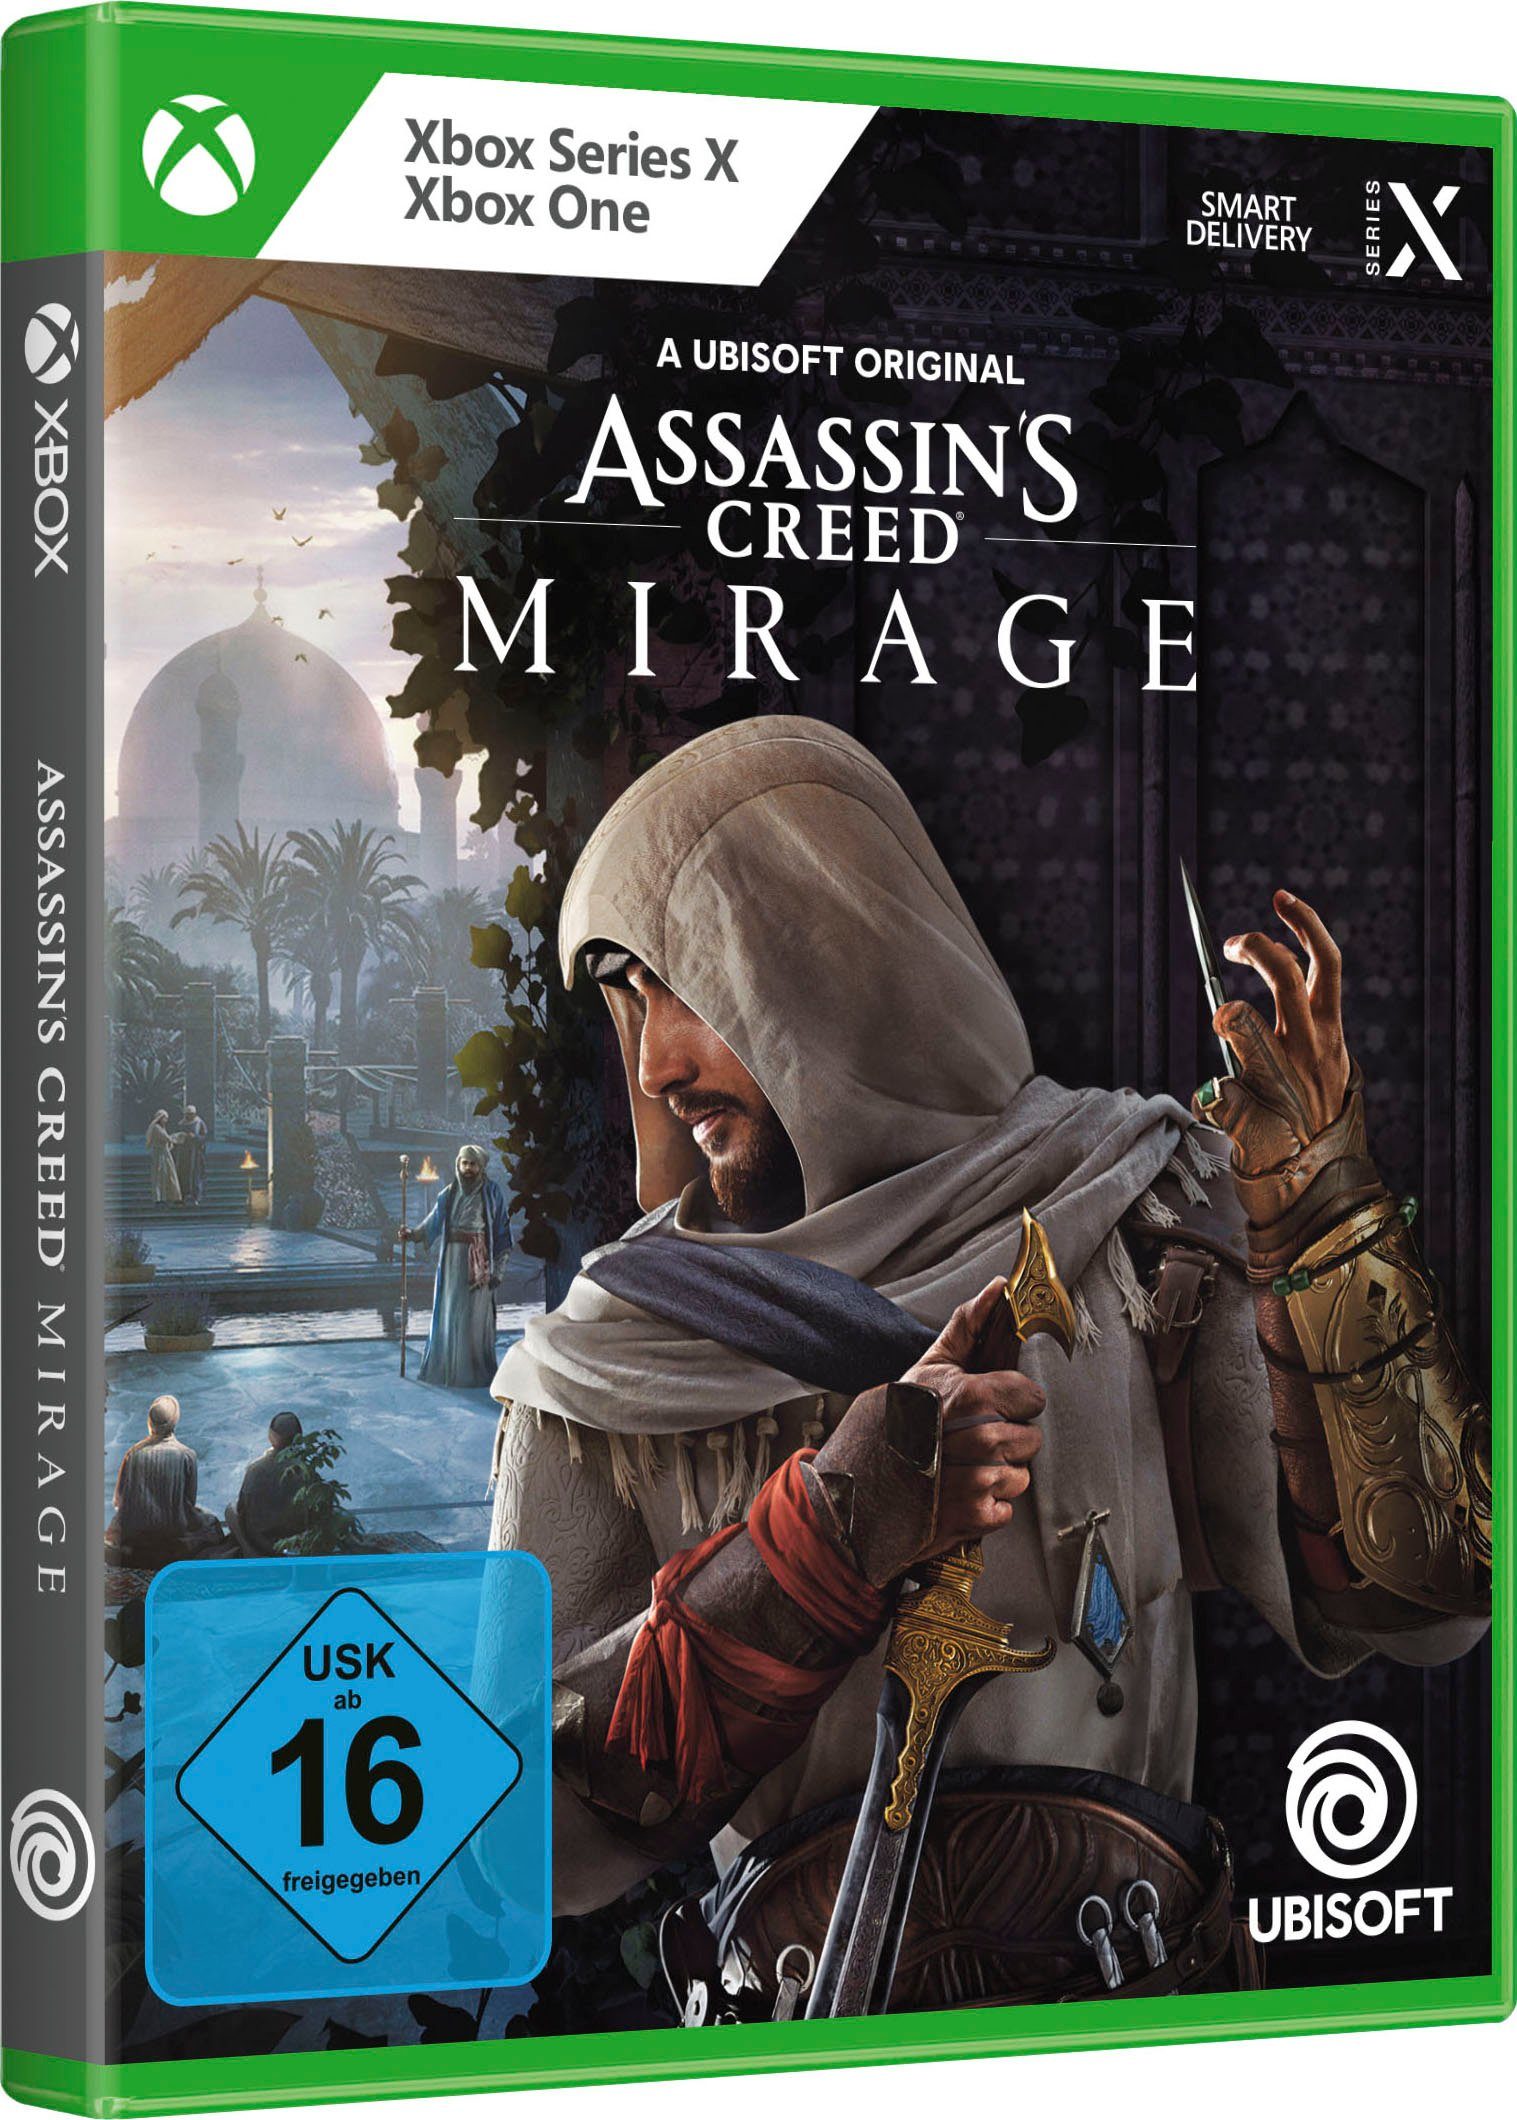 Xbox Creed Xbox One, Series Assassin's X UBISOFT Mirage